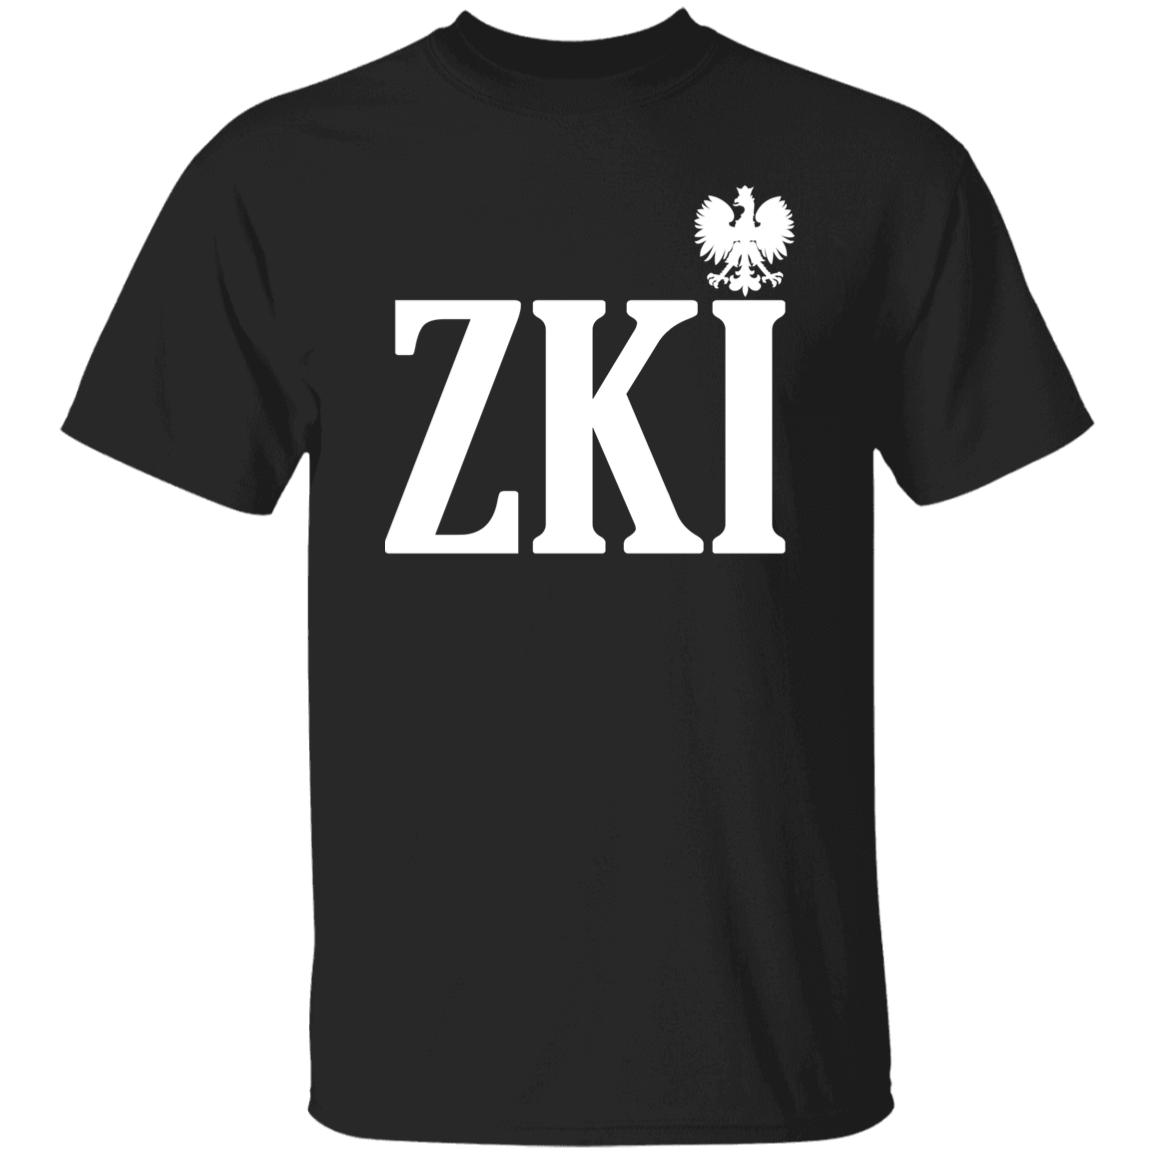 ZKI Polish Surname Ending Apparel CustomCat G500 5.3 oz. T-Shirt Black S